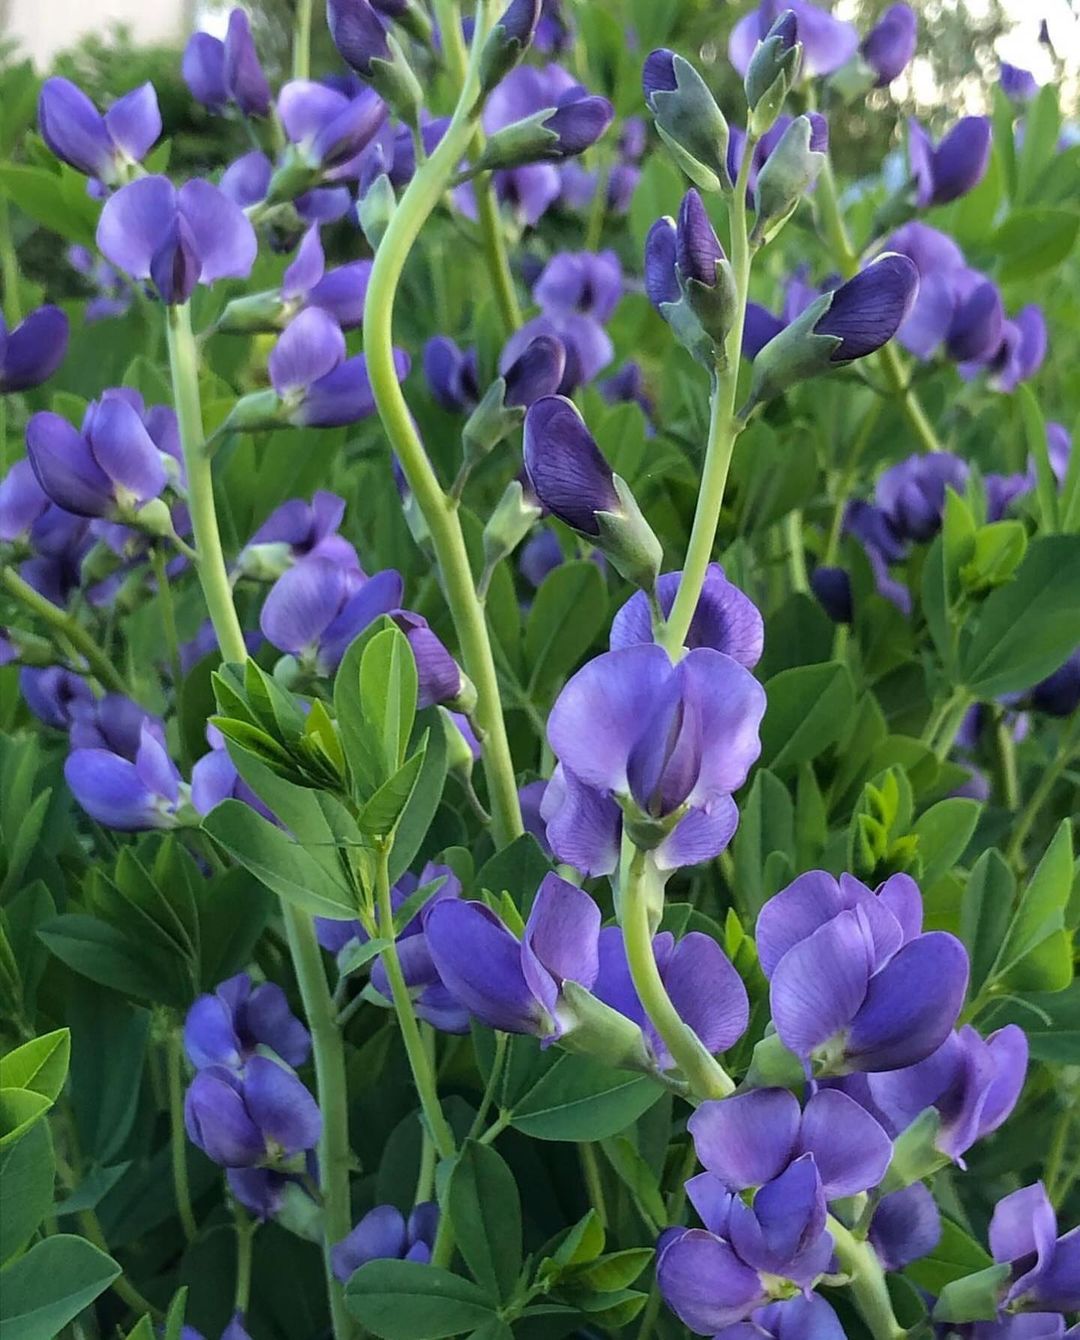 A close-up of Blue False Indigo, a plant with vibrant purple flowers.